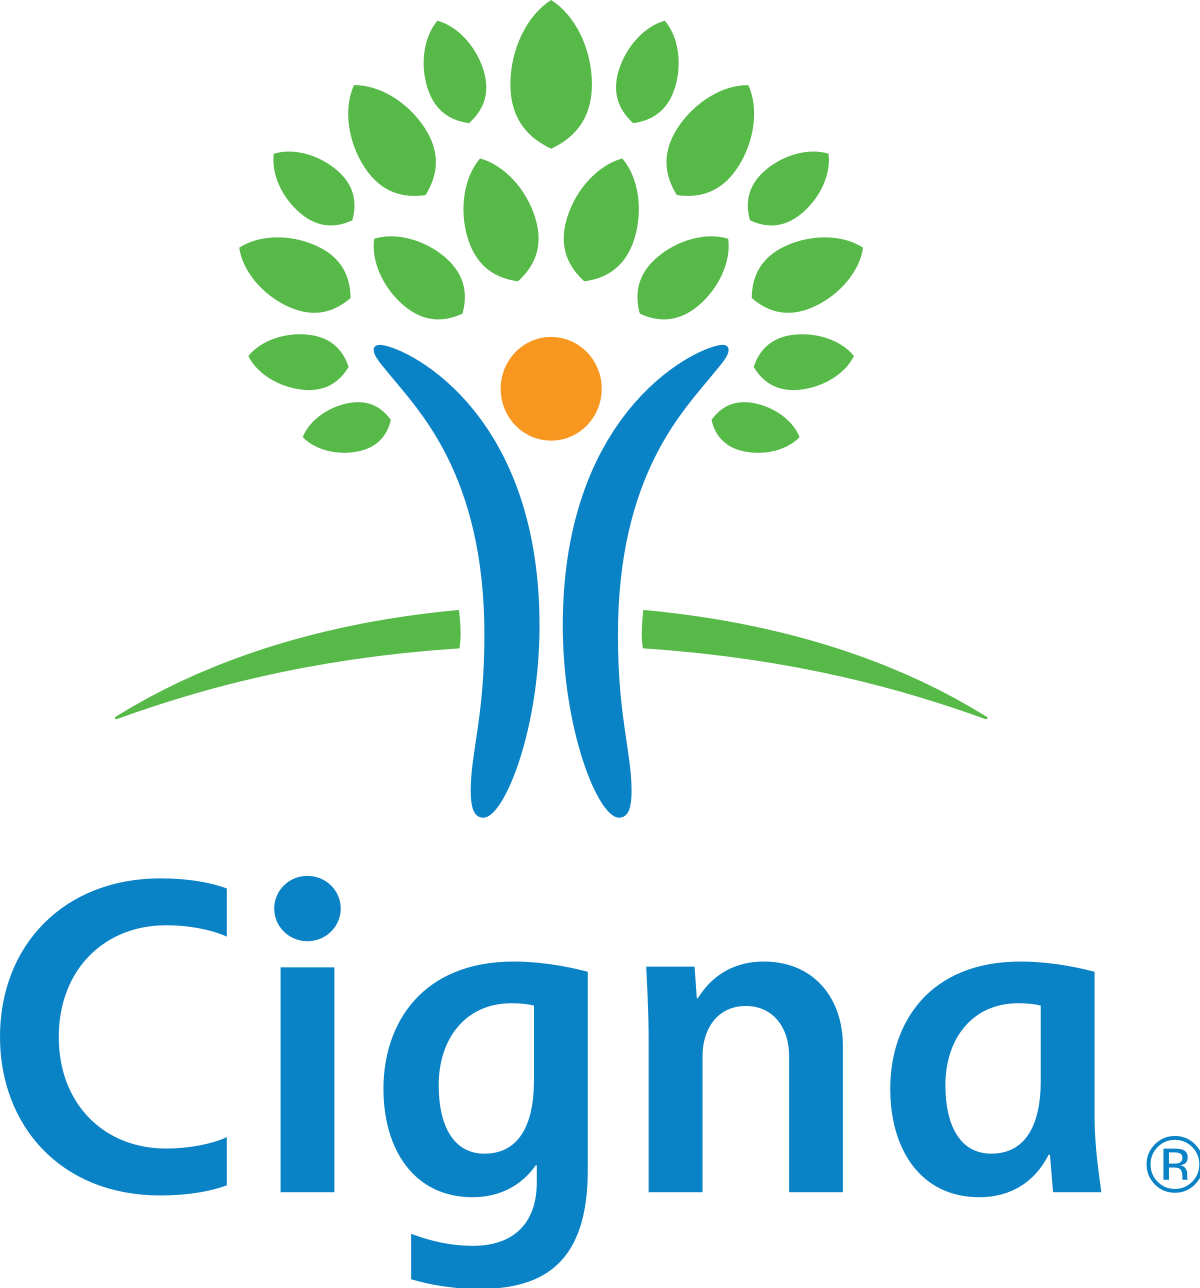 https://massageandglow.co.uk/wp-content/uploads/2022/03/Cigna_logo.png